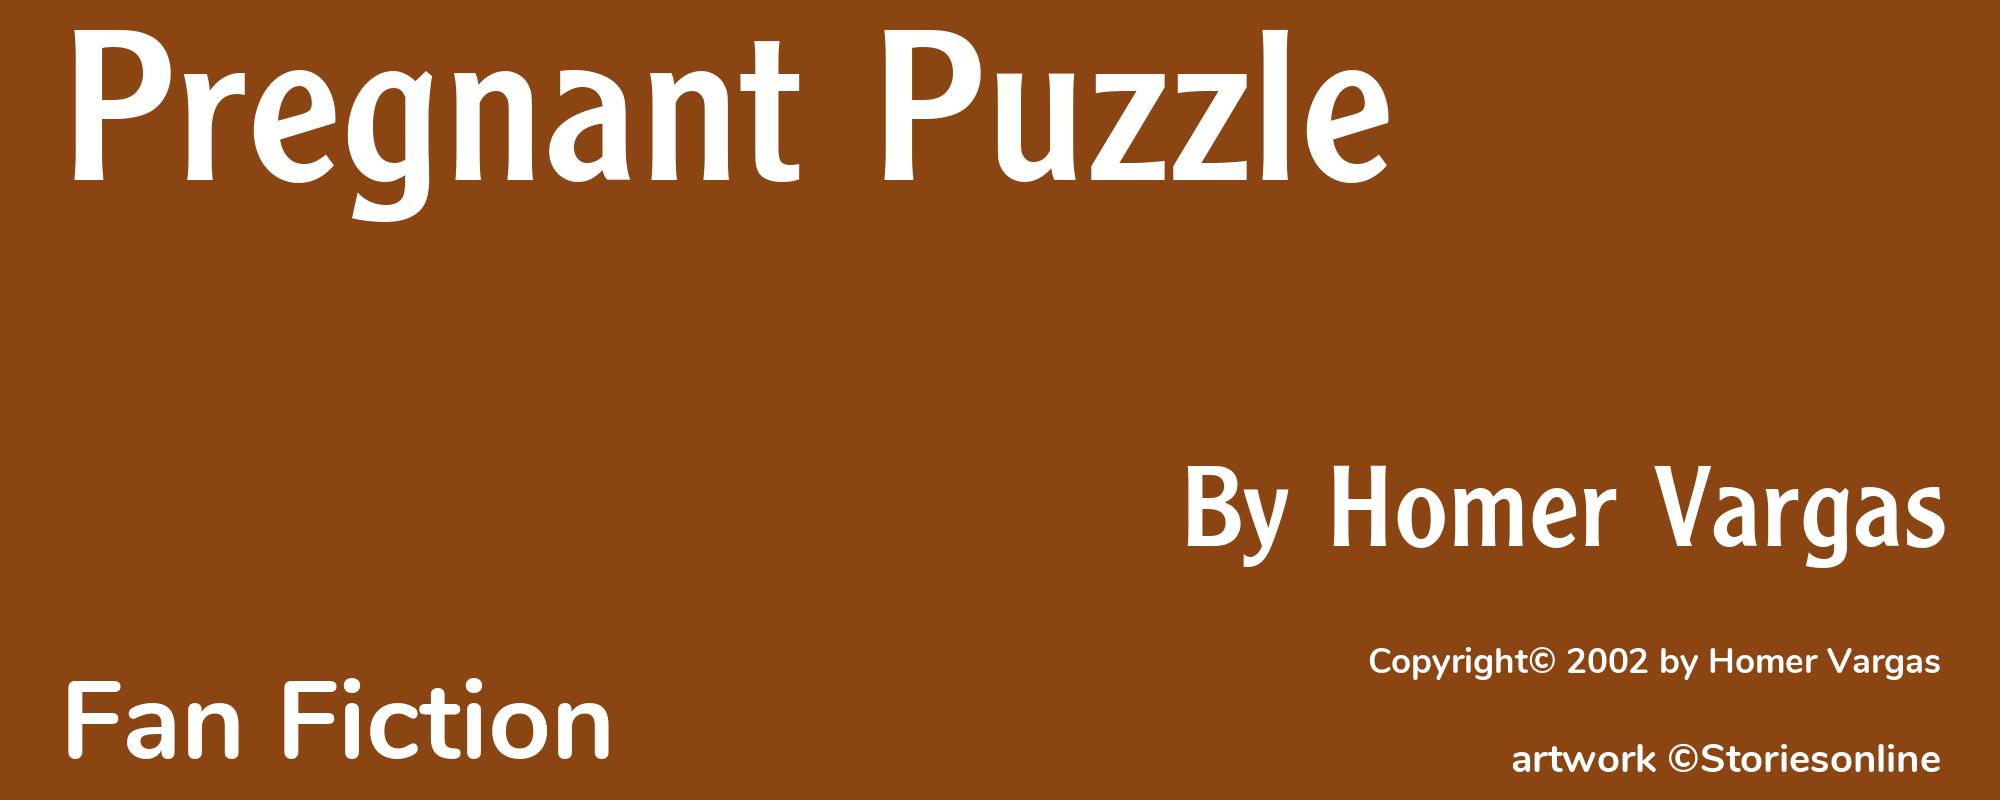 Pregnant Puzzle - Cover